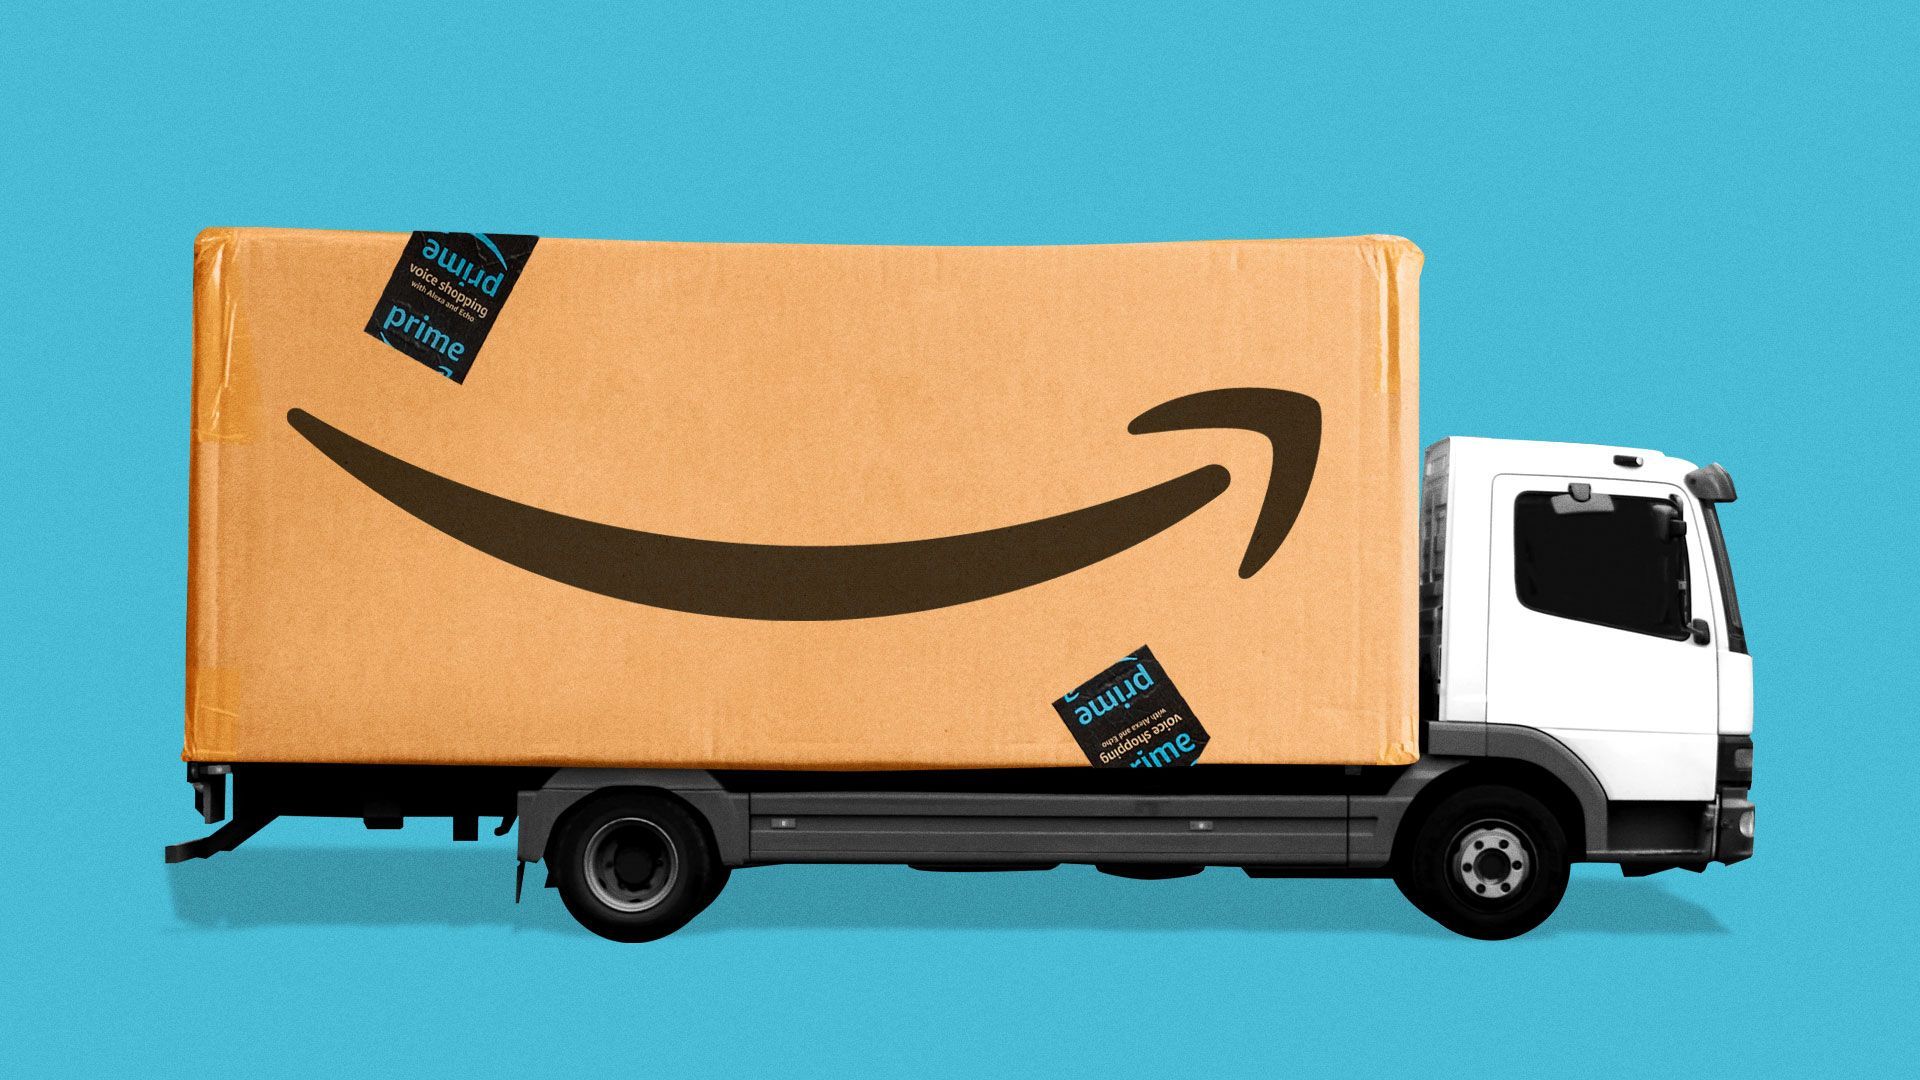 Illustration of Amazon shipping box freight truck